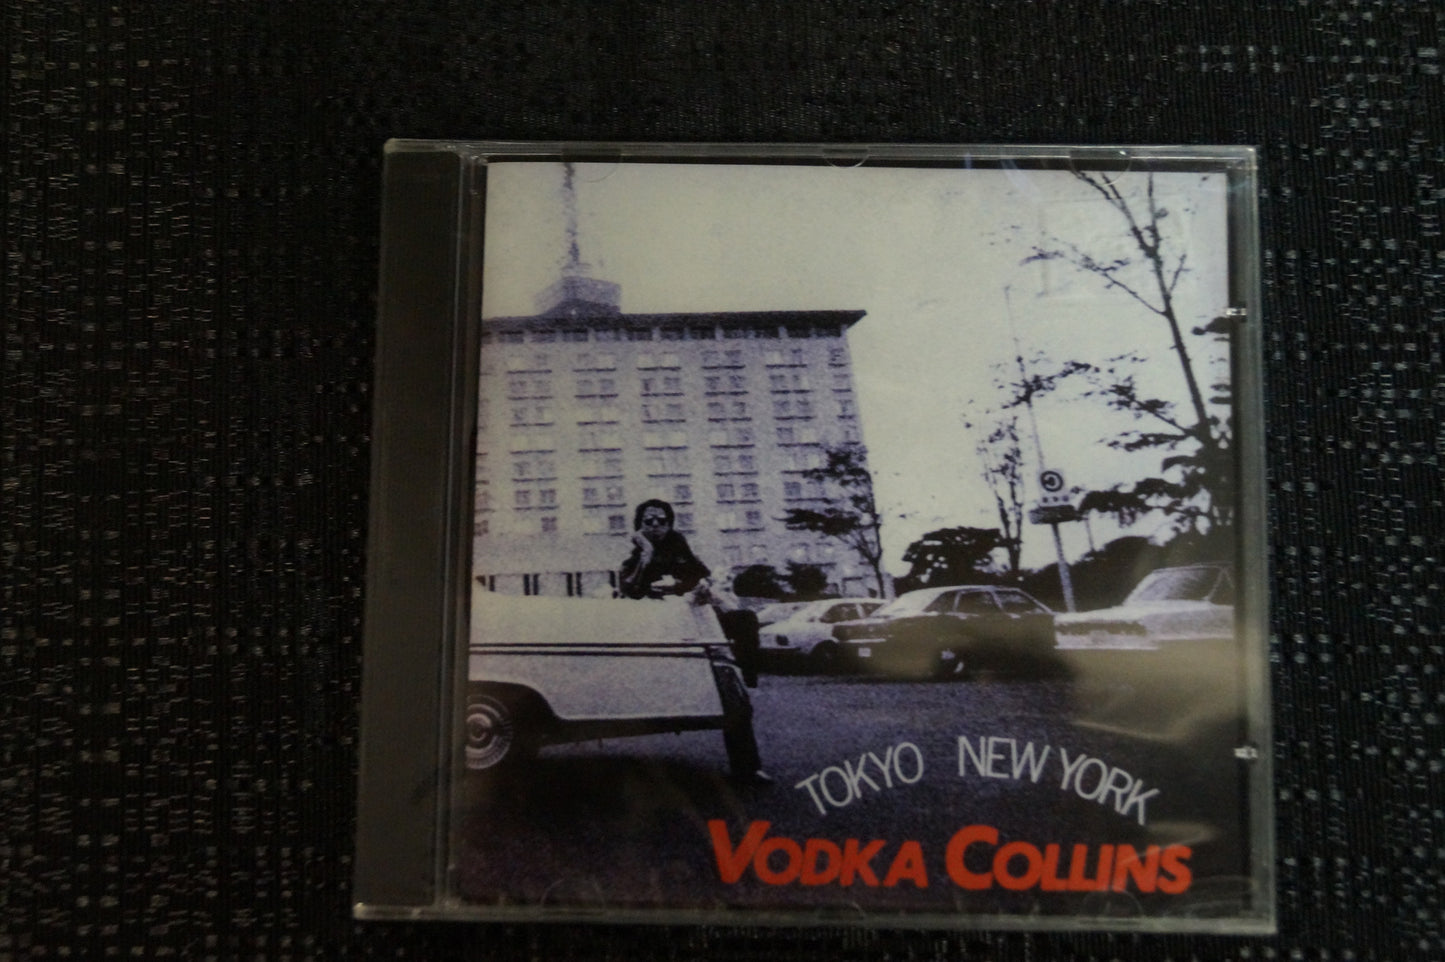 Vodka Collins "Tokyo New York" 1998 CD Art By Kozik